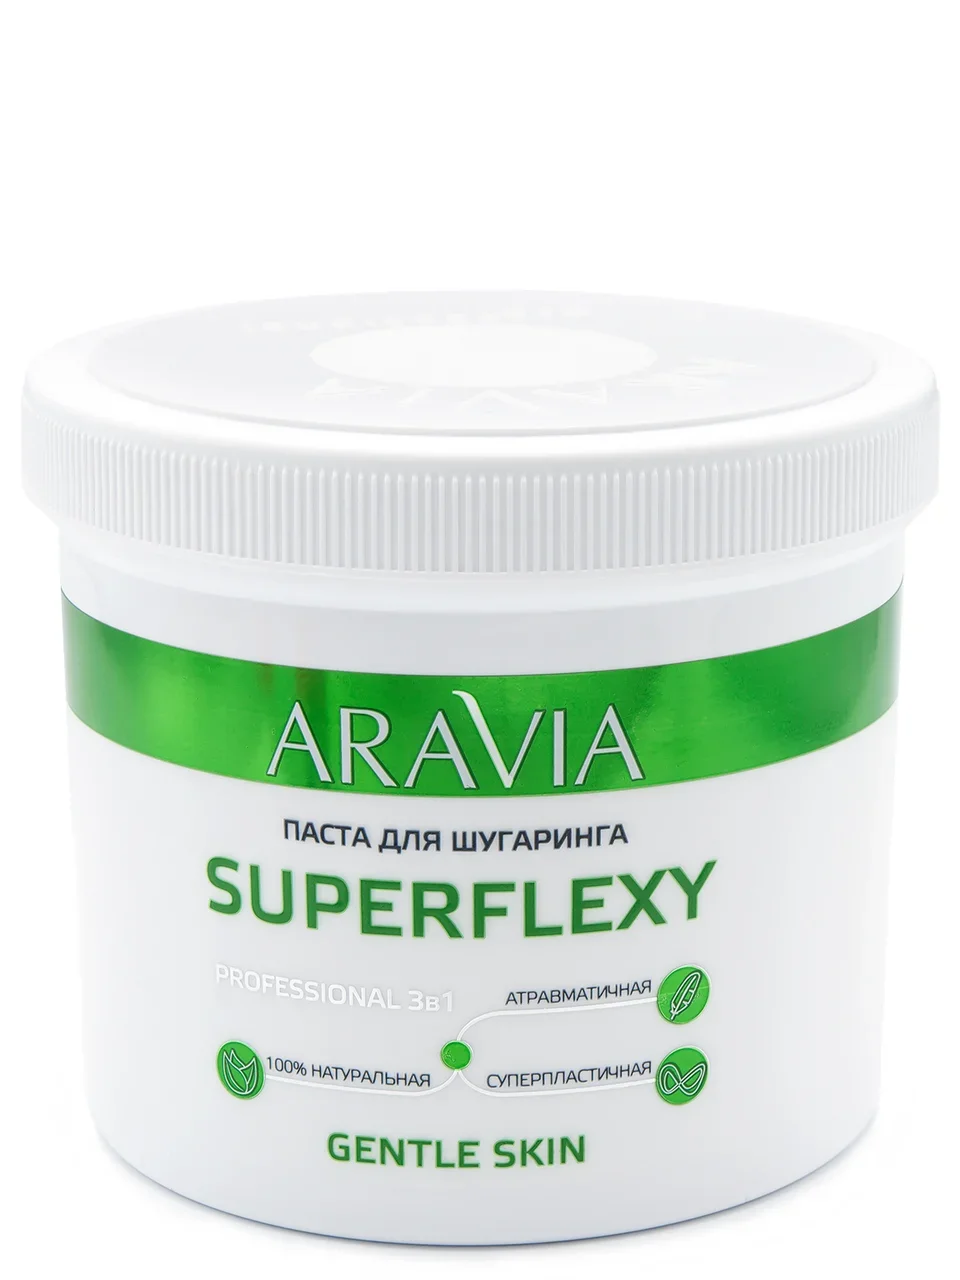 Паста для шугаринга Aravia Professional Superflexy Gentle Skin 750 г aravia паста для шугаринга мягкая start epil 750 гр